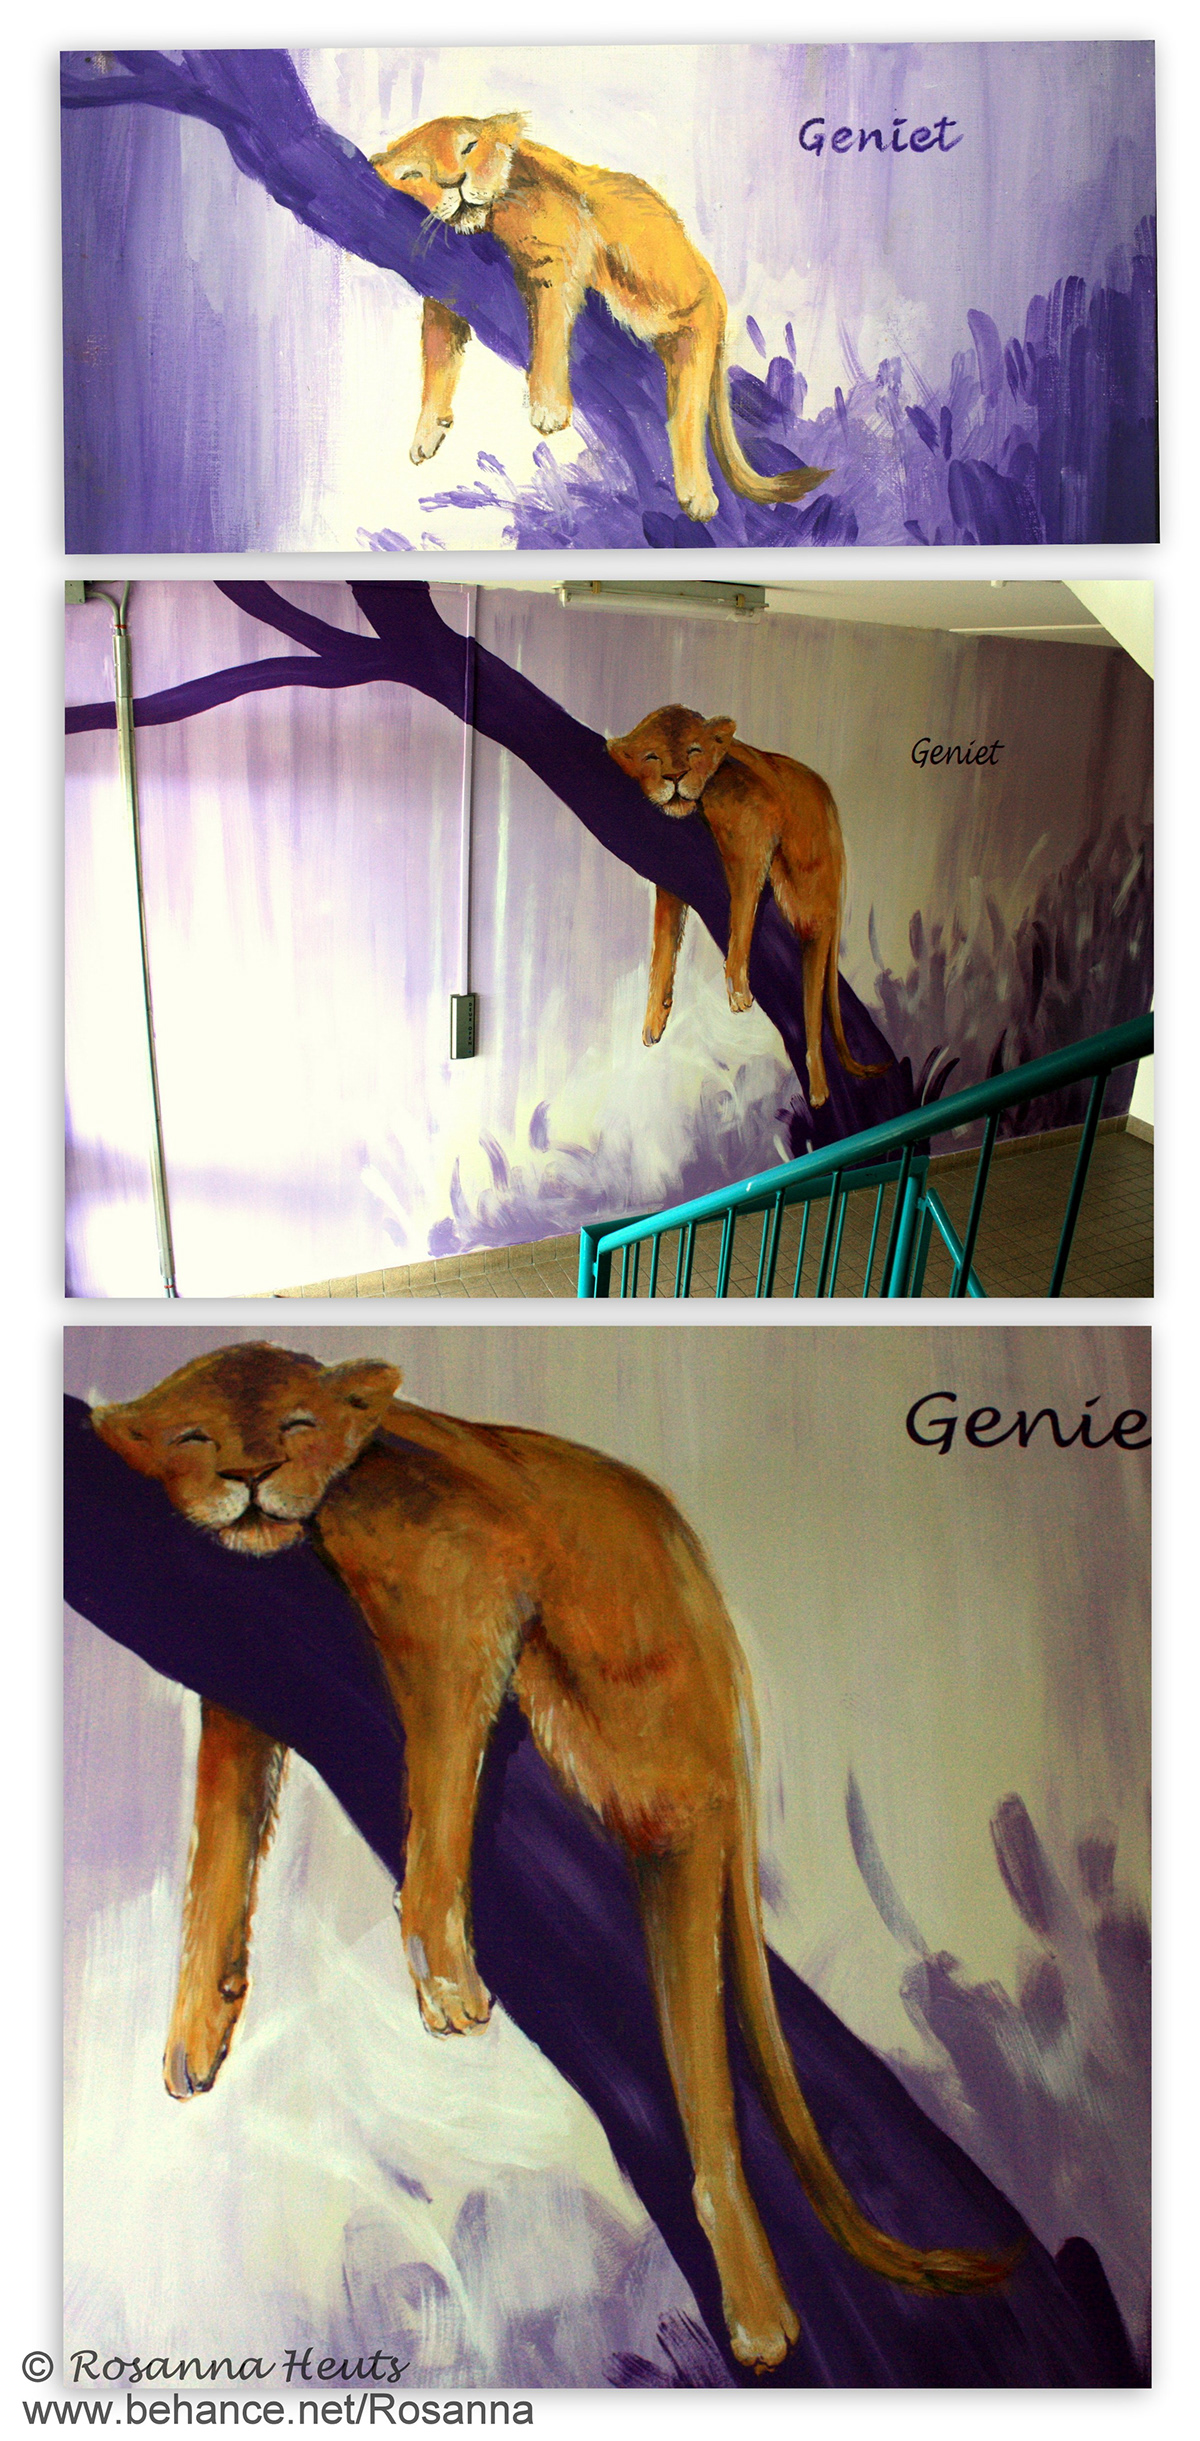 Leeuw lion apartment apartment building flat Mural Mural Painting muurschildering